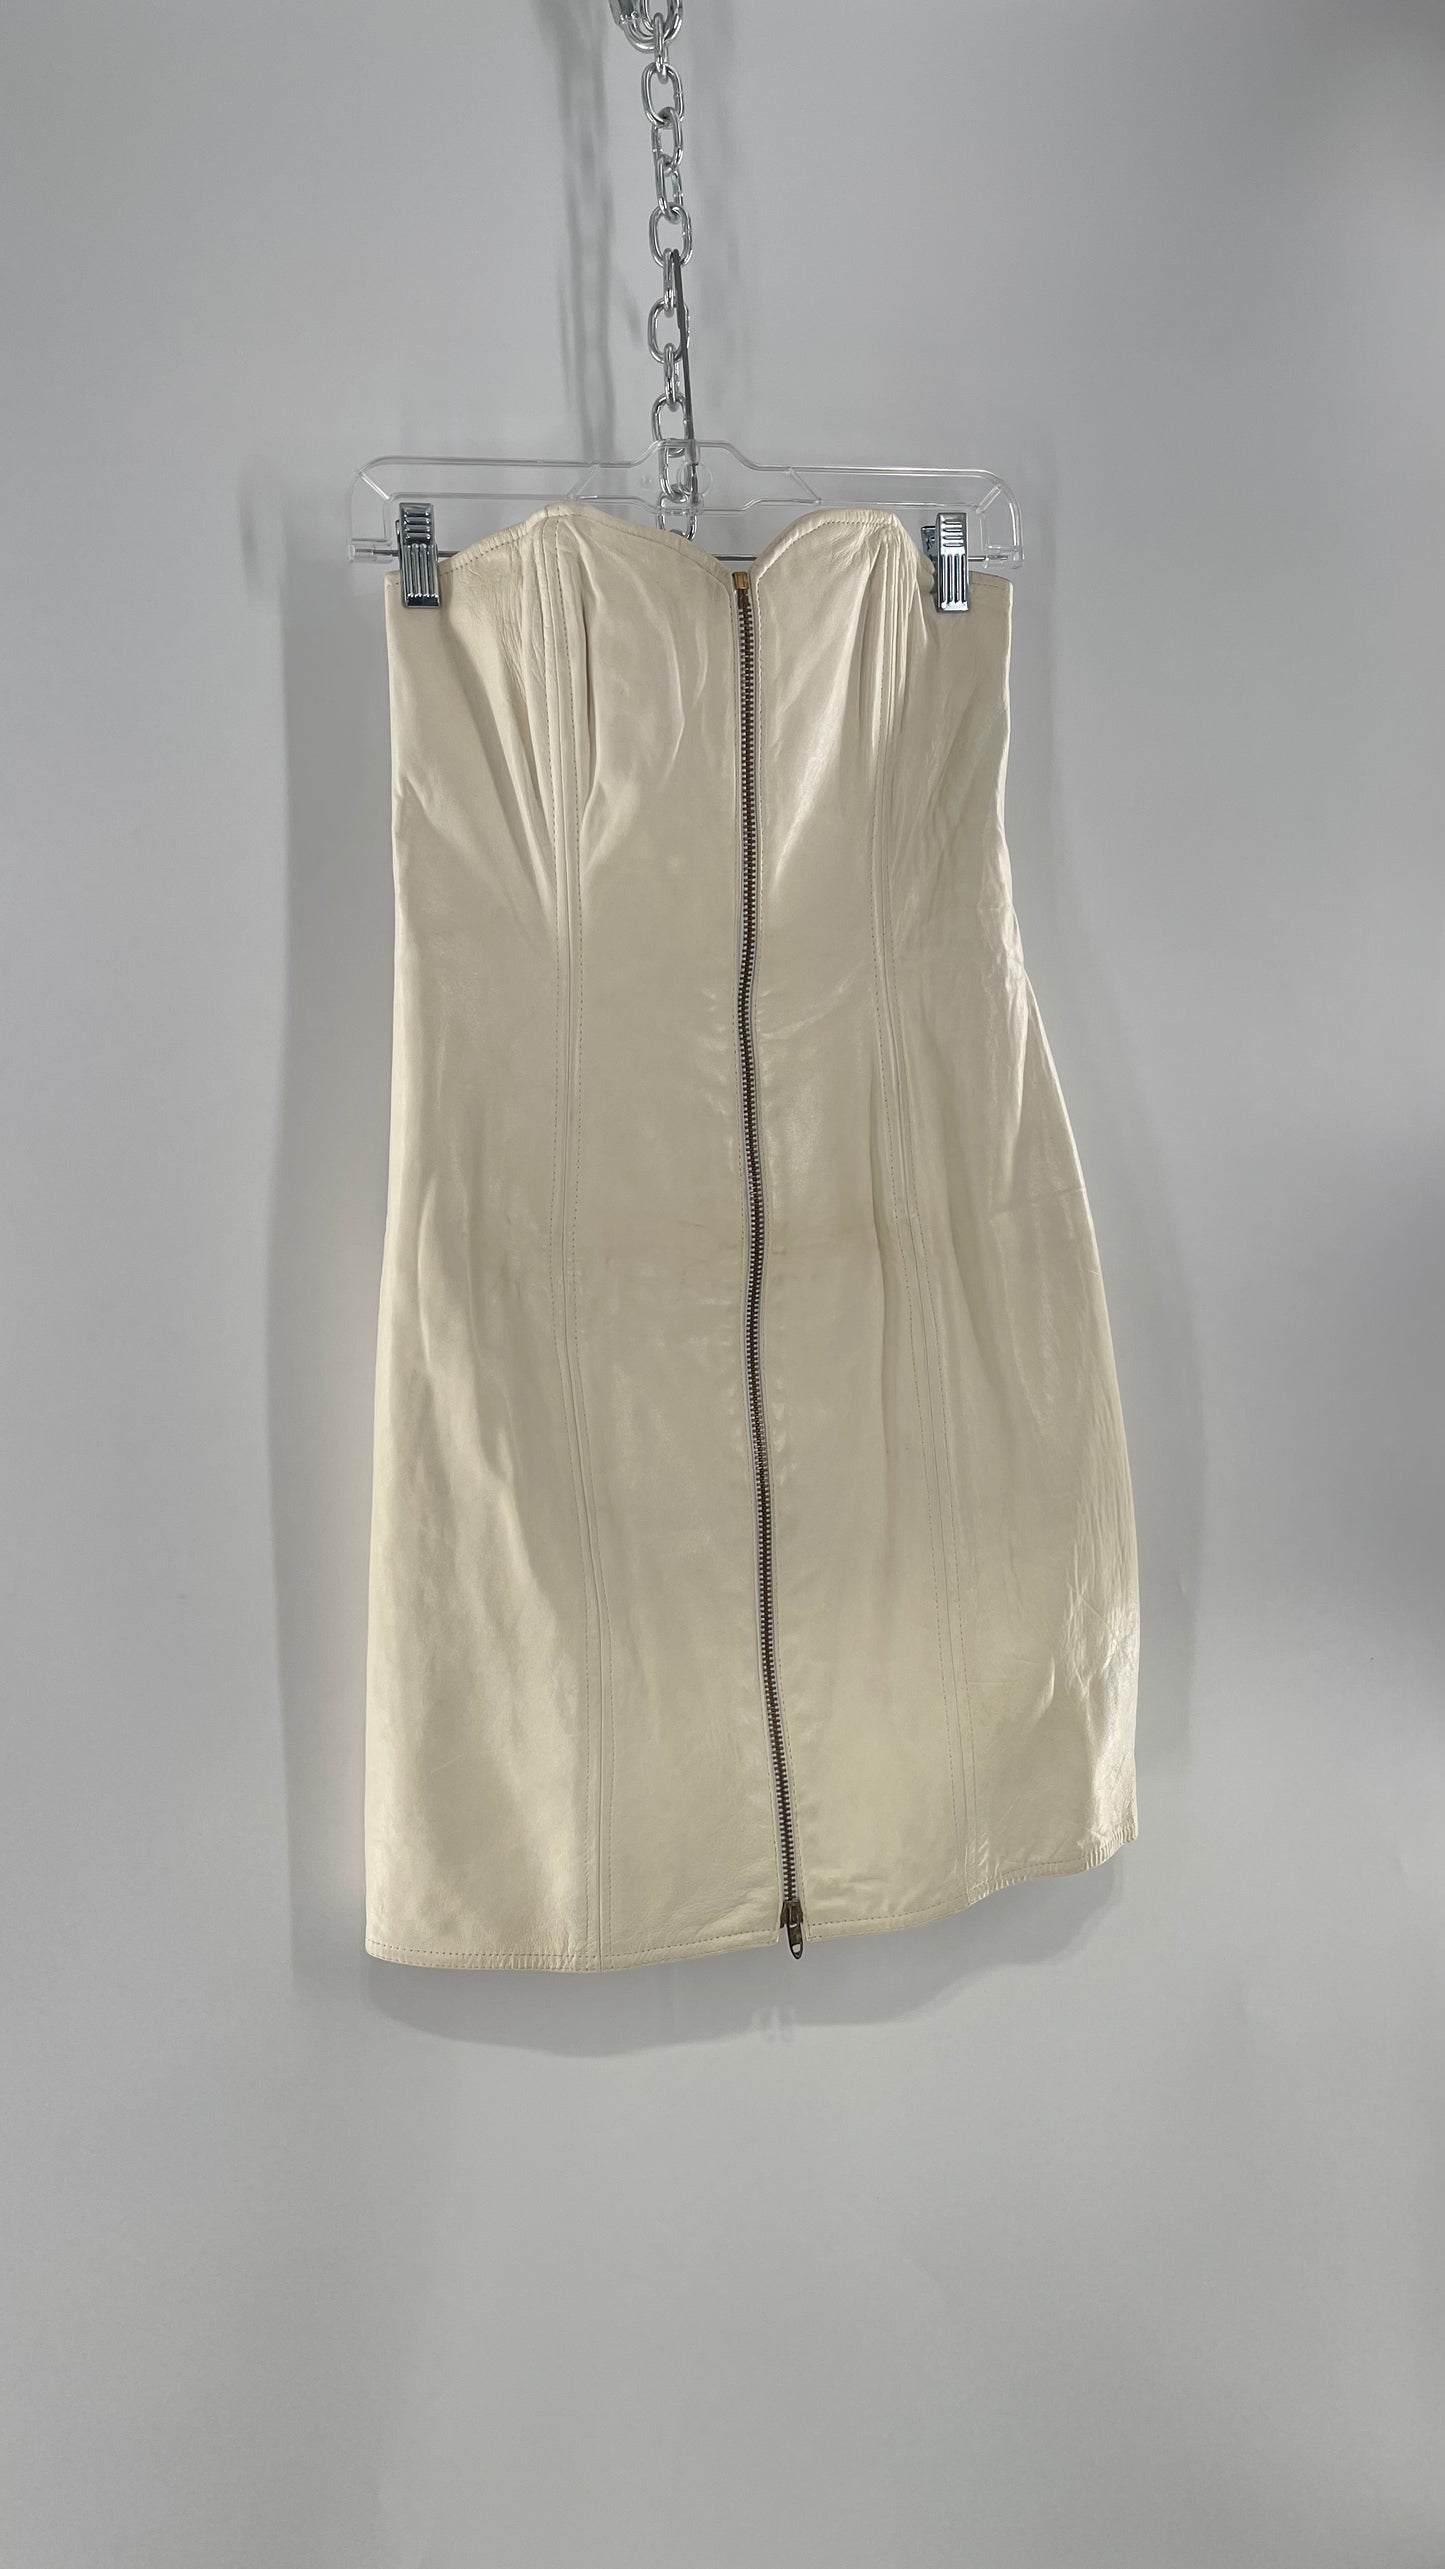 Vintage White Leather Zip Front Mini Dress *Handmade* (Size Small/Medium)